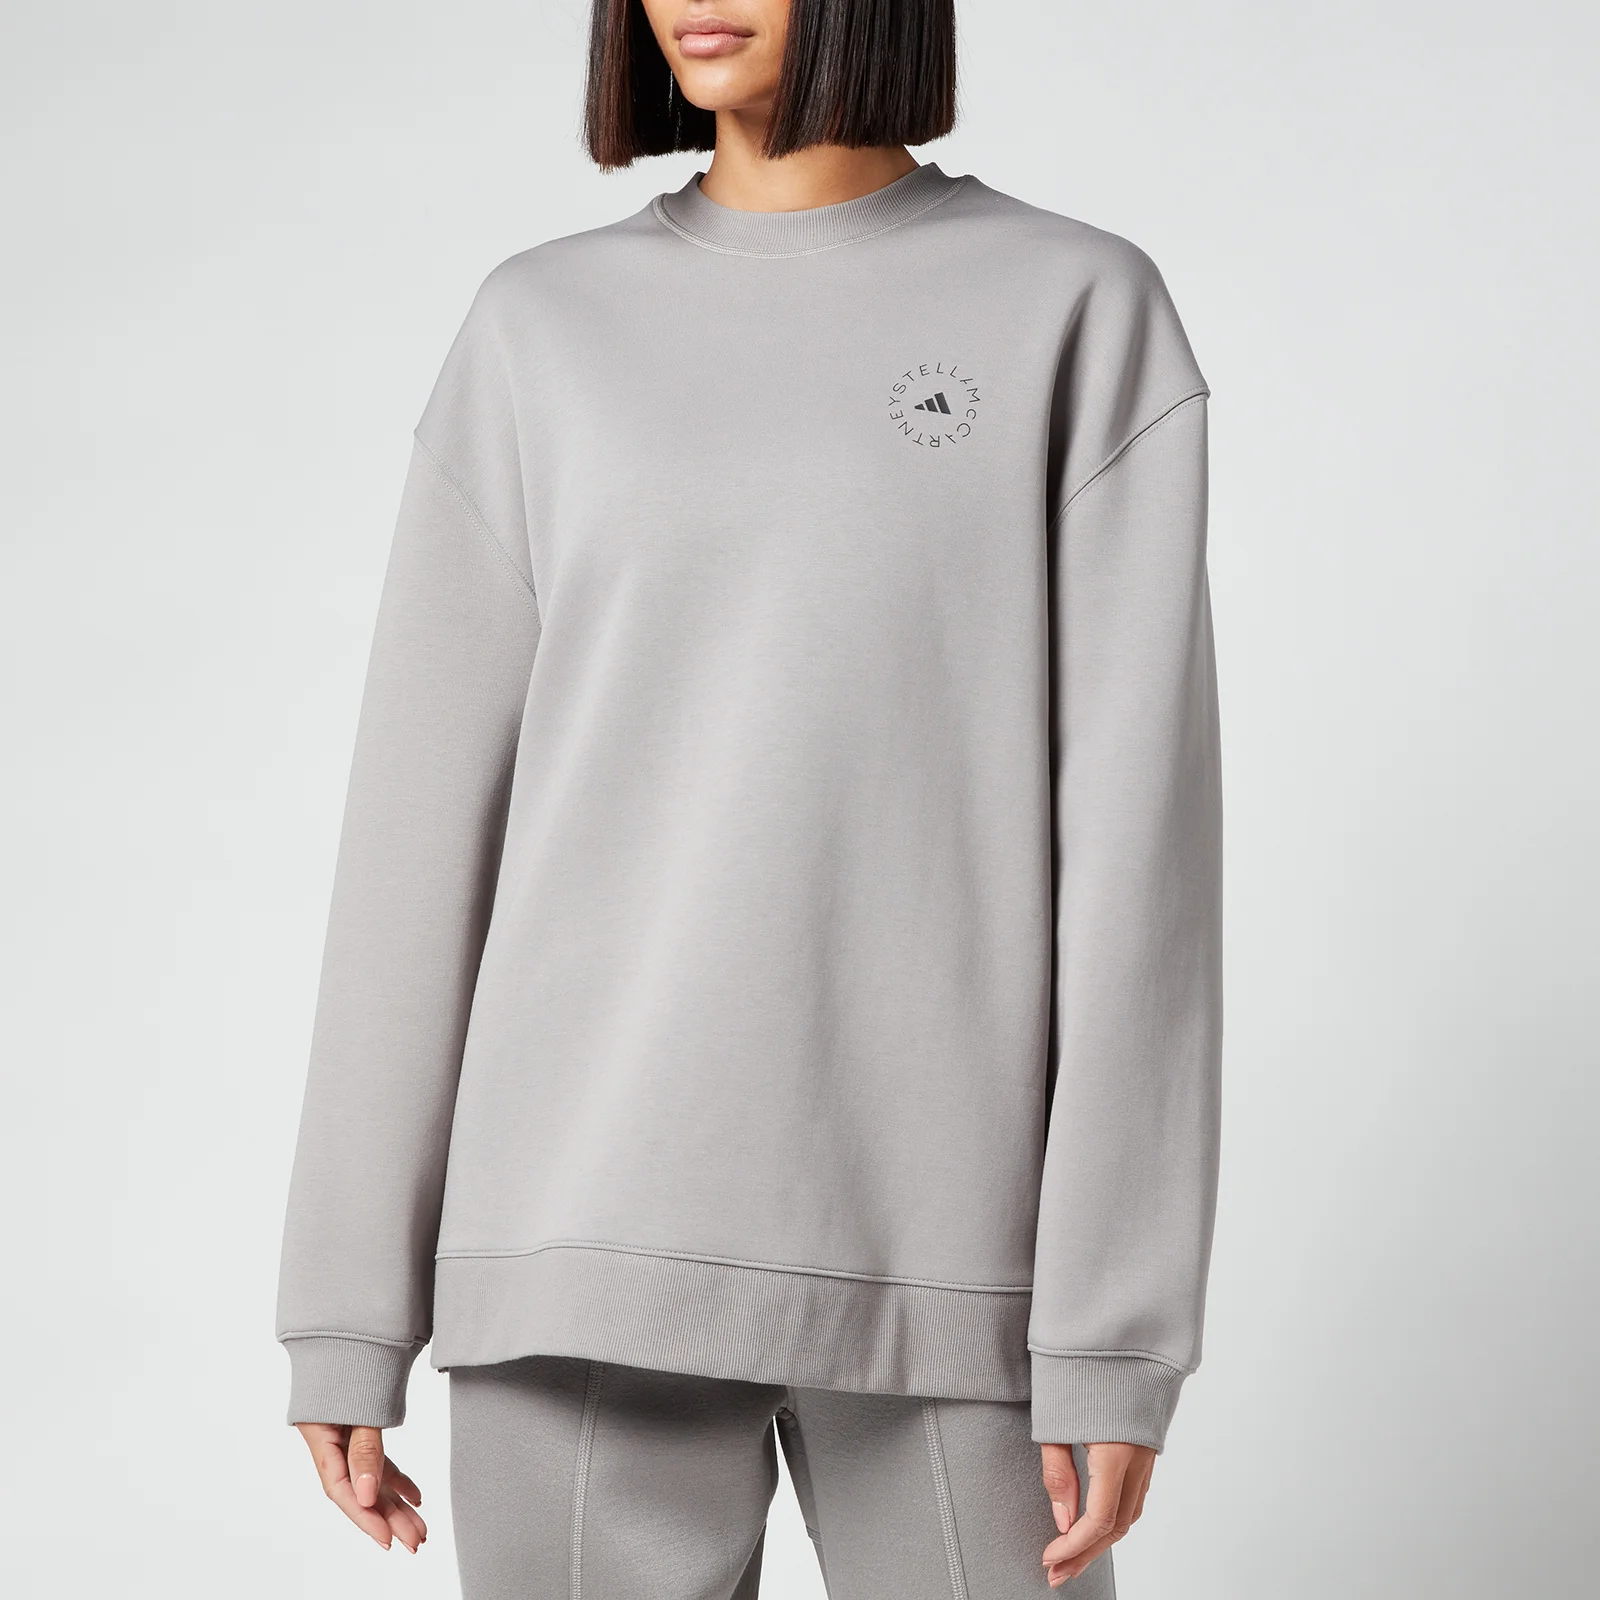 adidas by Stella McCartney Women's SC Sweatshirt - Dove Grey Image 1